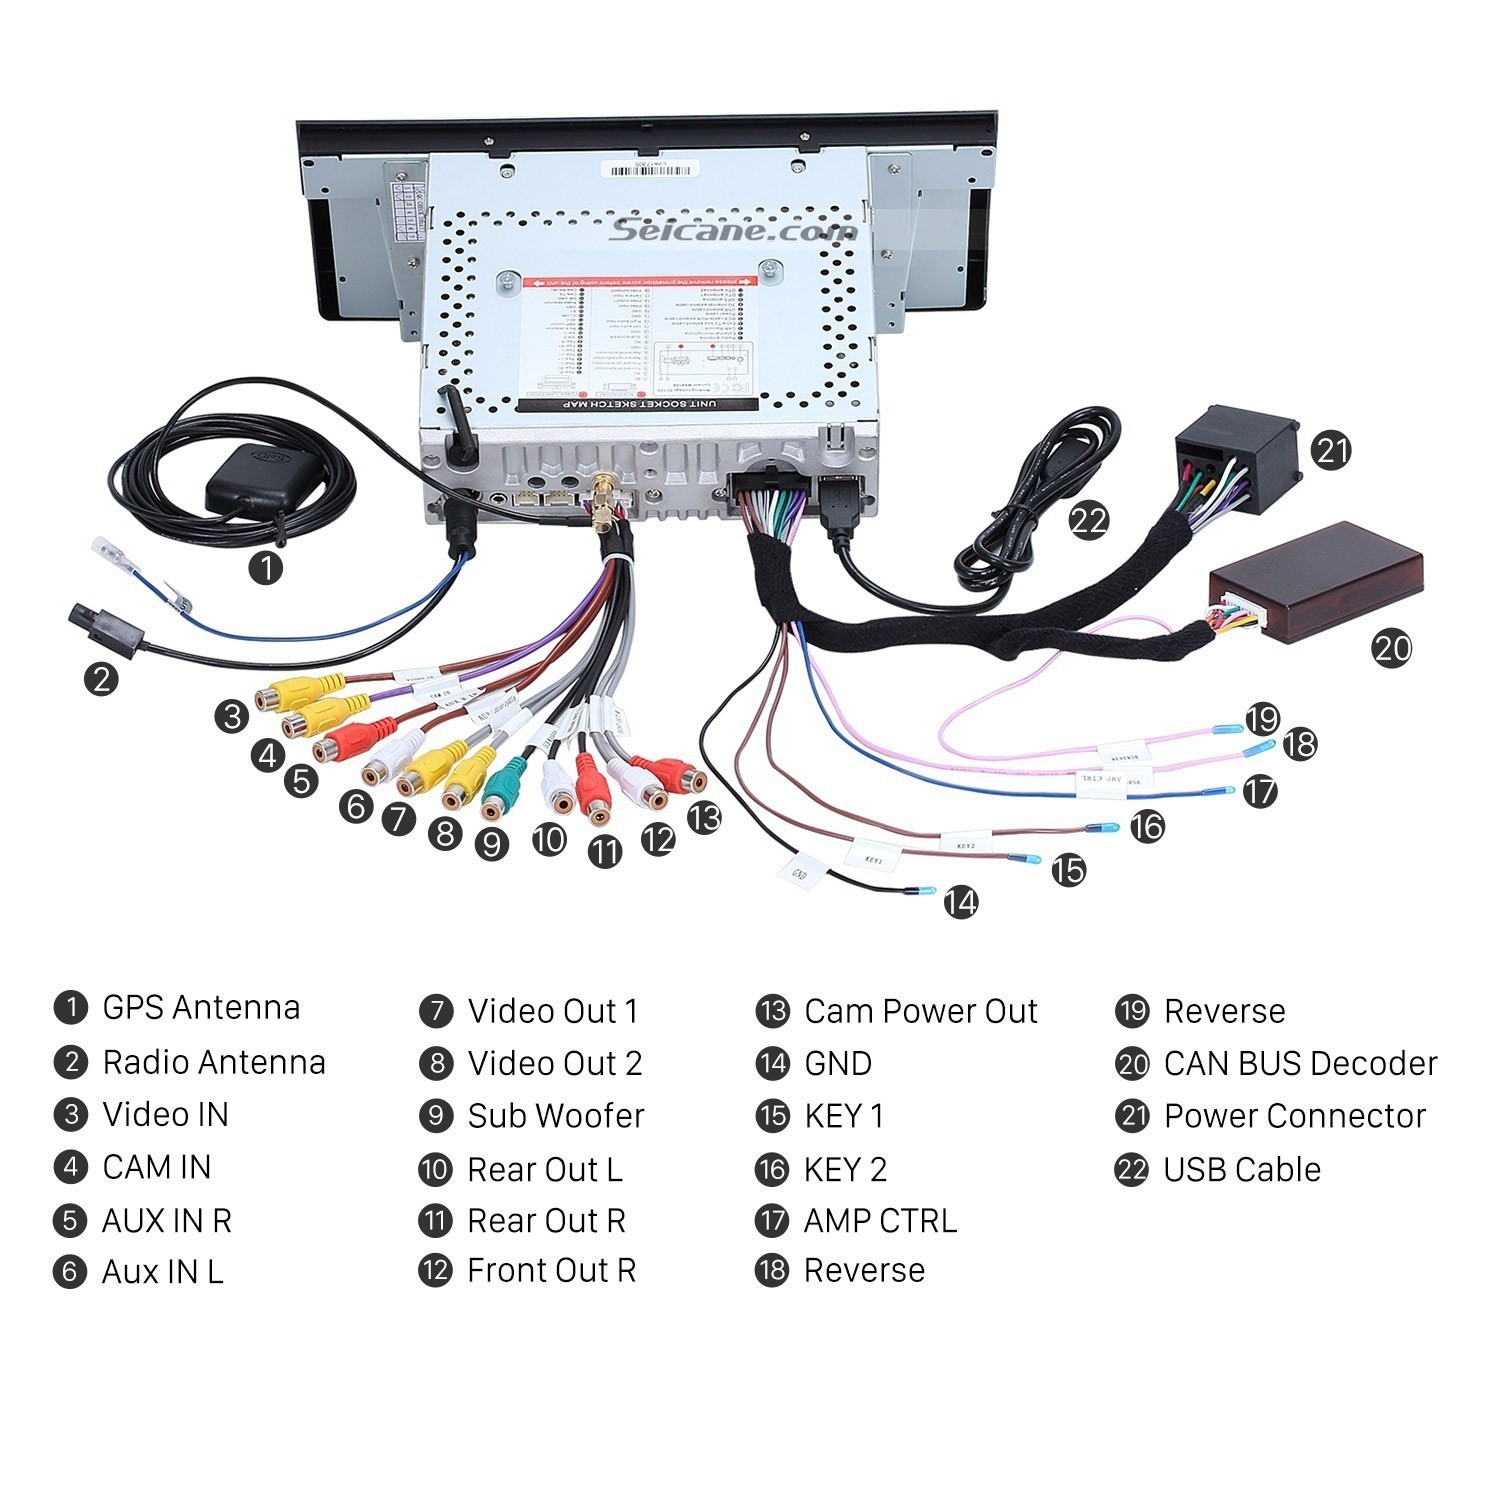 Labeled Car Dashboard Diagram Multiple Amplifier Wiring Diagram Valid Amp Wiring Diagram Car Of Labeled Car Dashboard Diagram